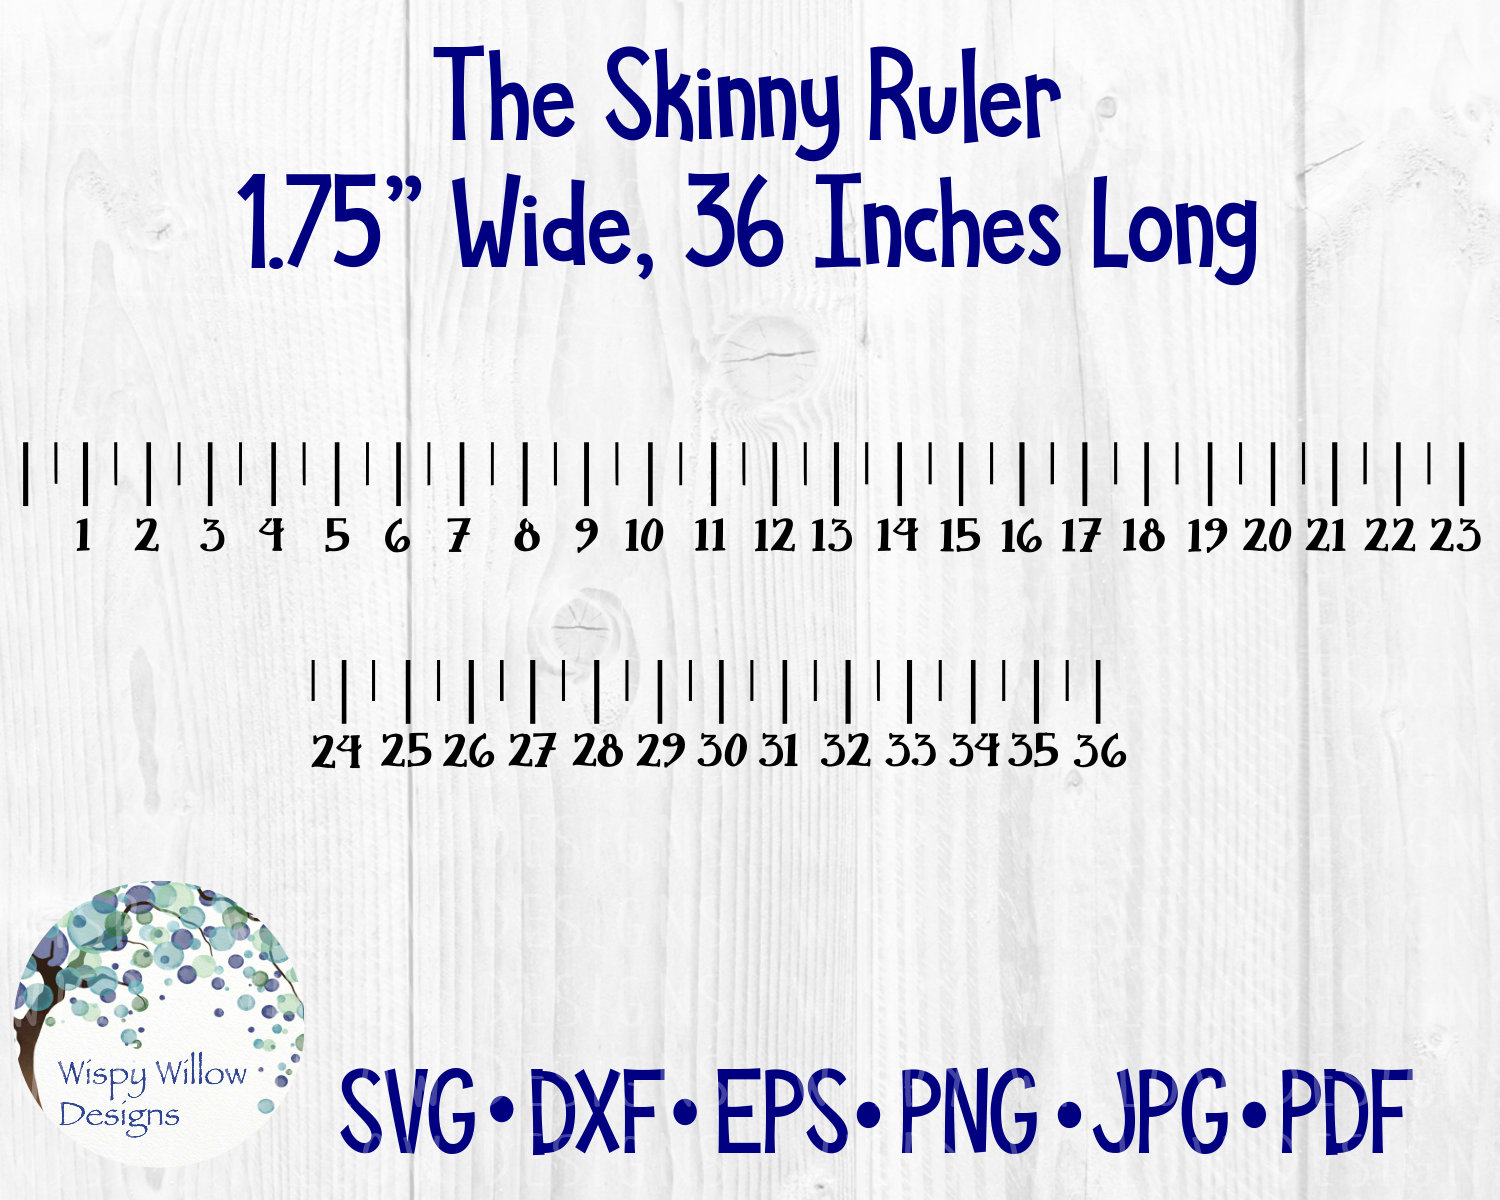 38,913 Long Ruler Images, Stock Photos, 3D objects, & Vectors